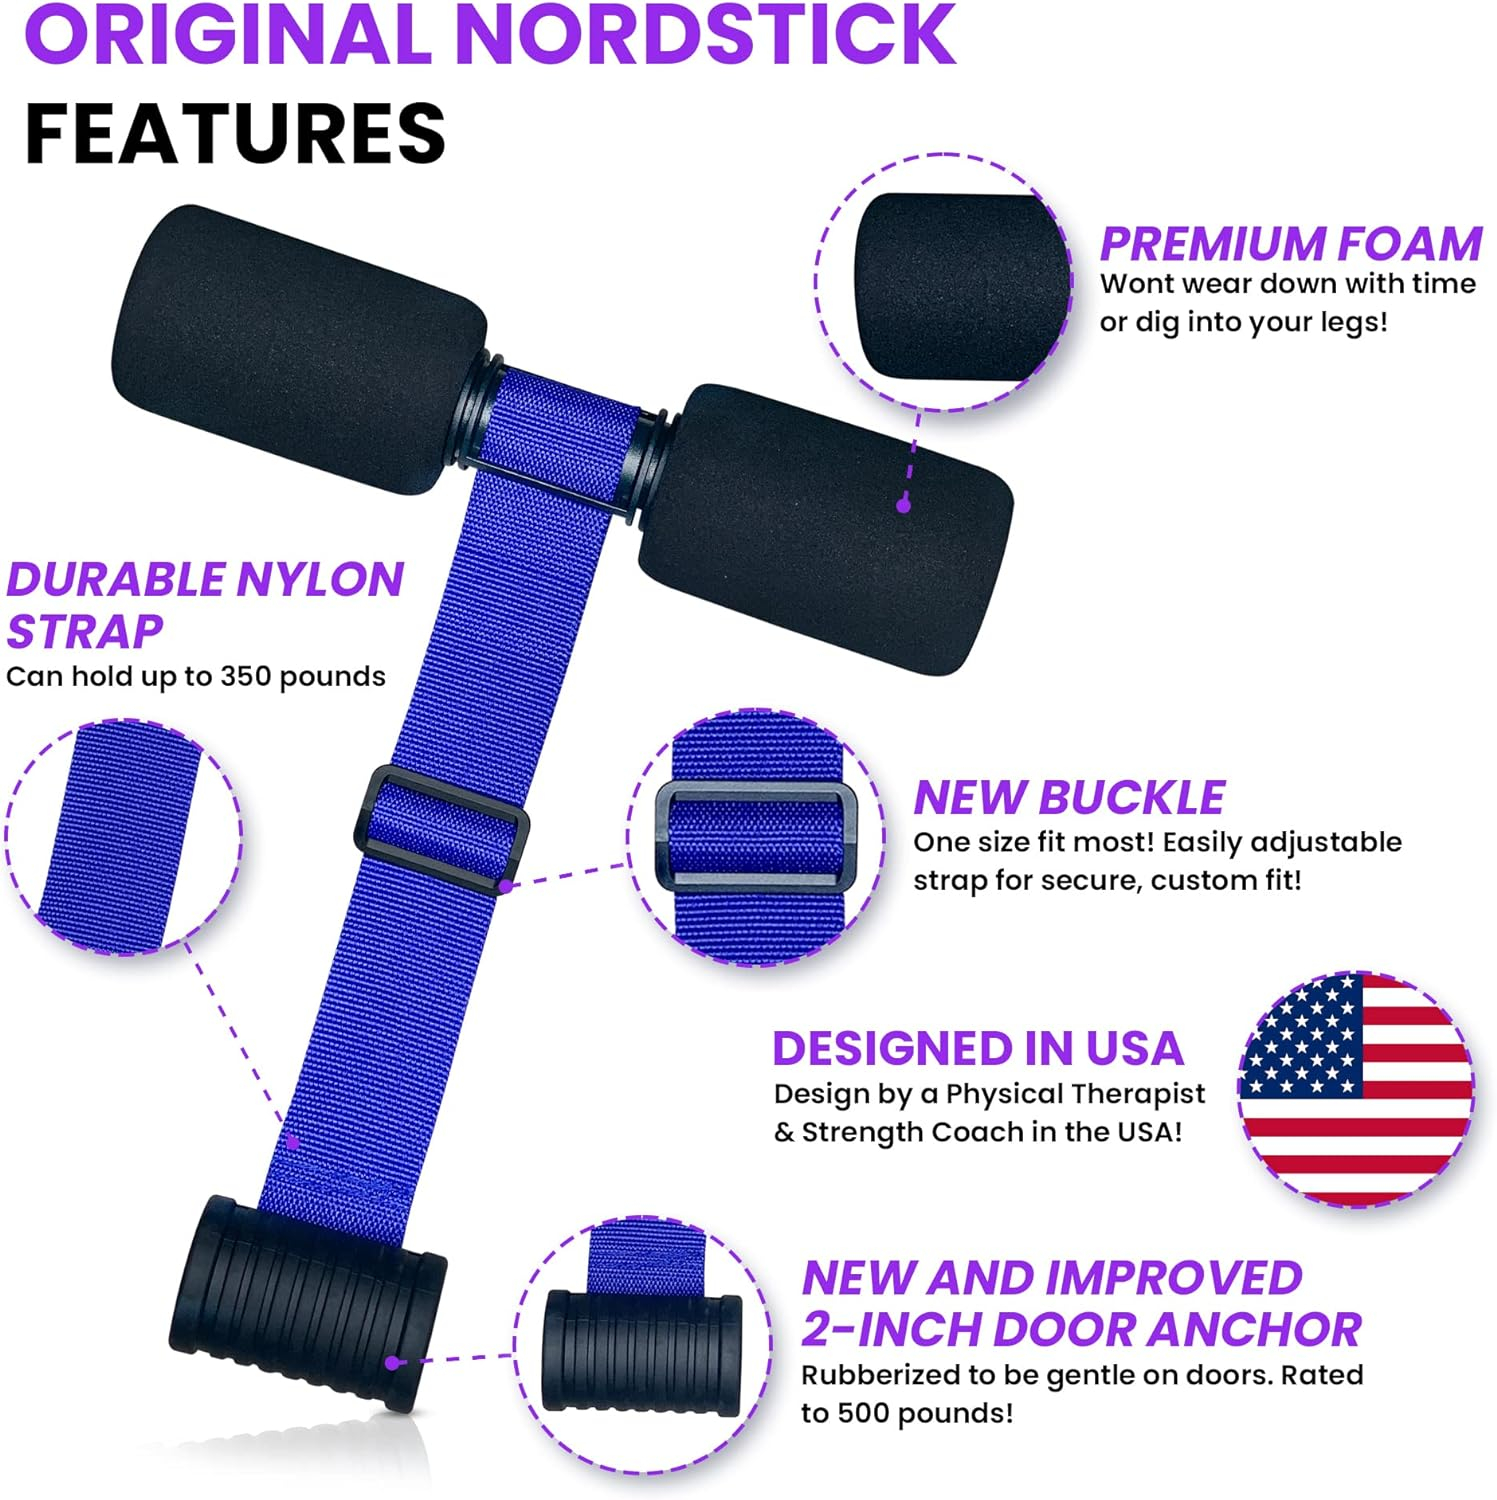 NordStick Nordic Hamstring Curl Strap - Original Nord Stick Exercise Set for Home and Travel - 5 Second Set Up